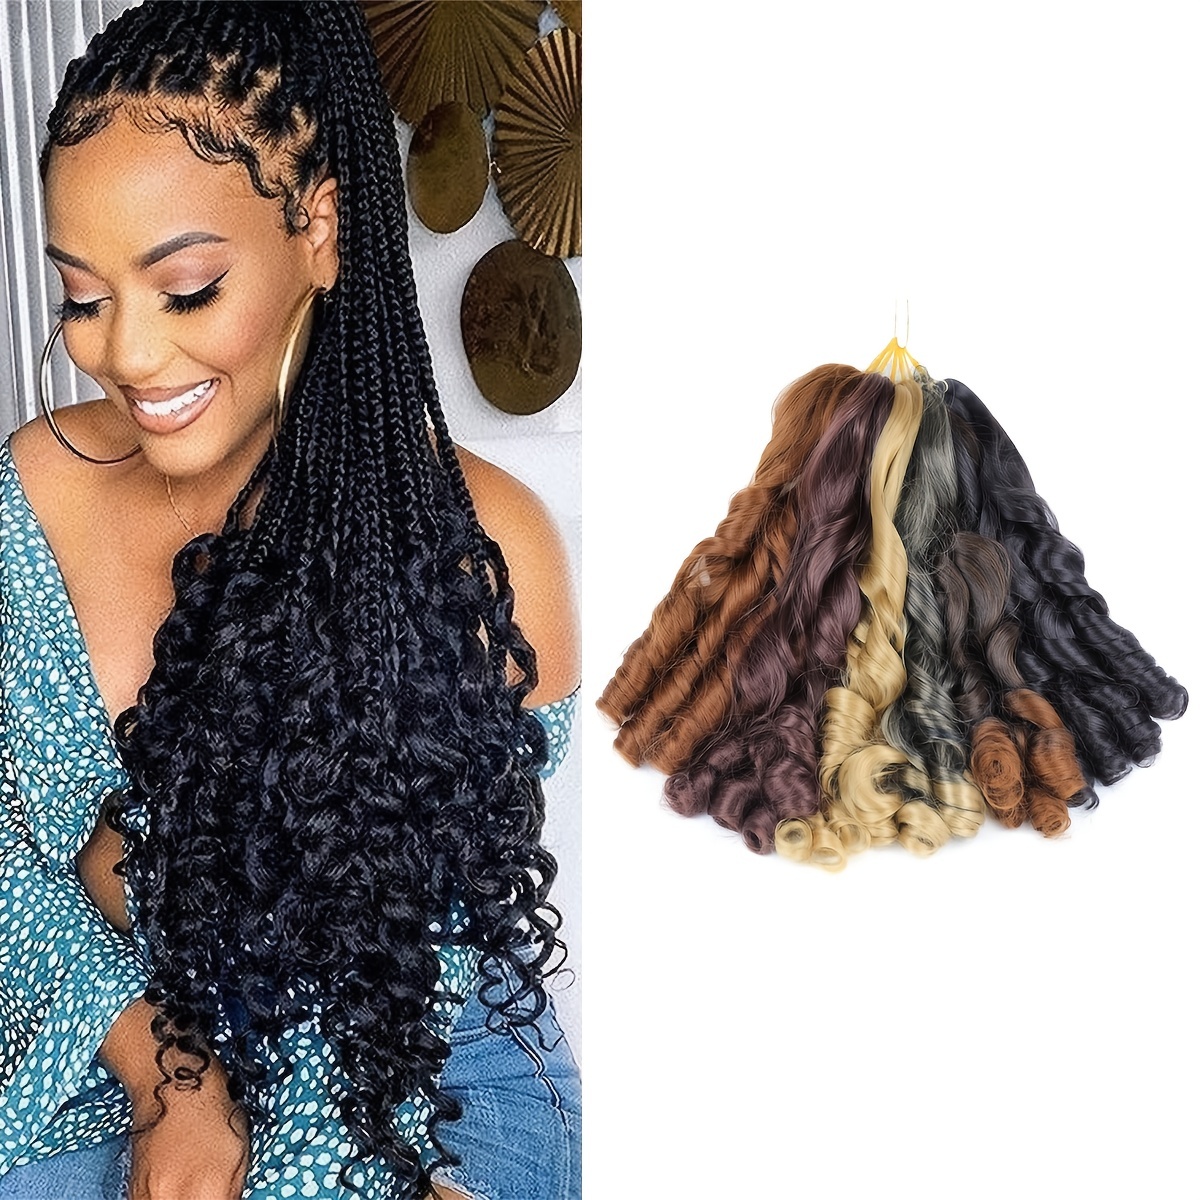 Crochet Hair for Women 21 Goddess Box Braid, Synthetic Pre-Loop French Curls Braid Hair, Crochet French Curls, Crochet Braid Curls, End Extensions